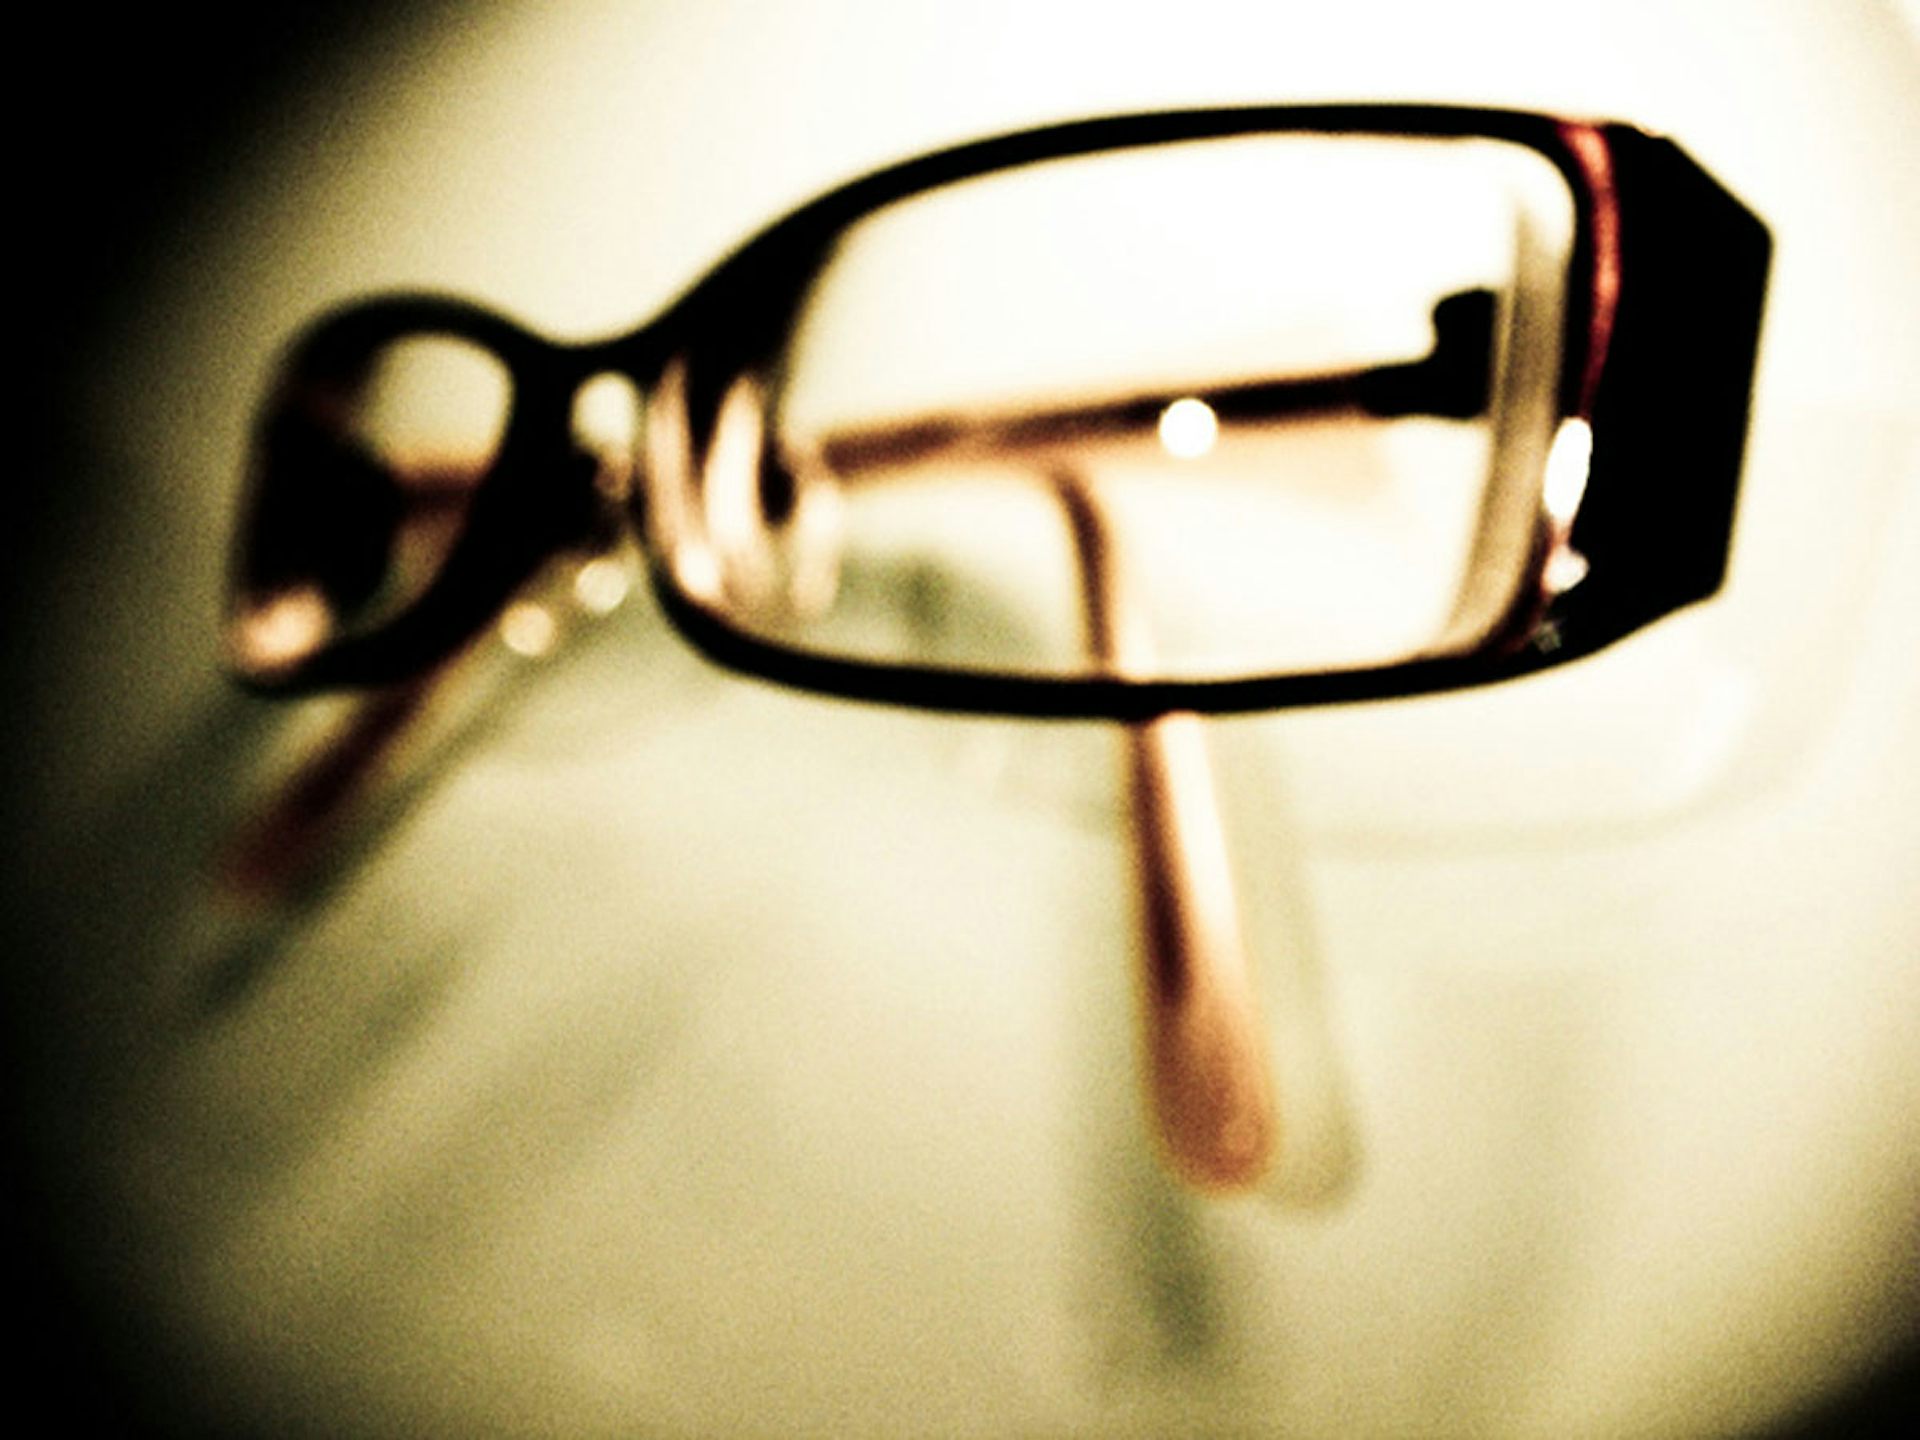 Where are the glass. Невидимые очки. Невидимка в очках. Часы невидимка с очками. Очки невидимые фото.